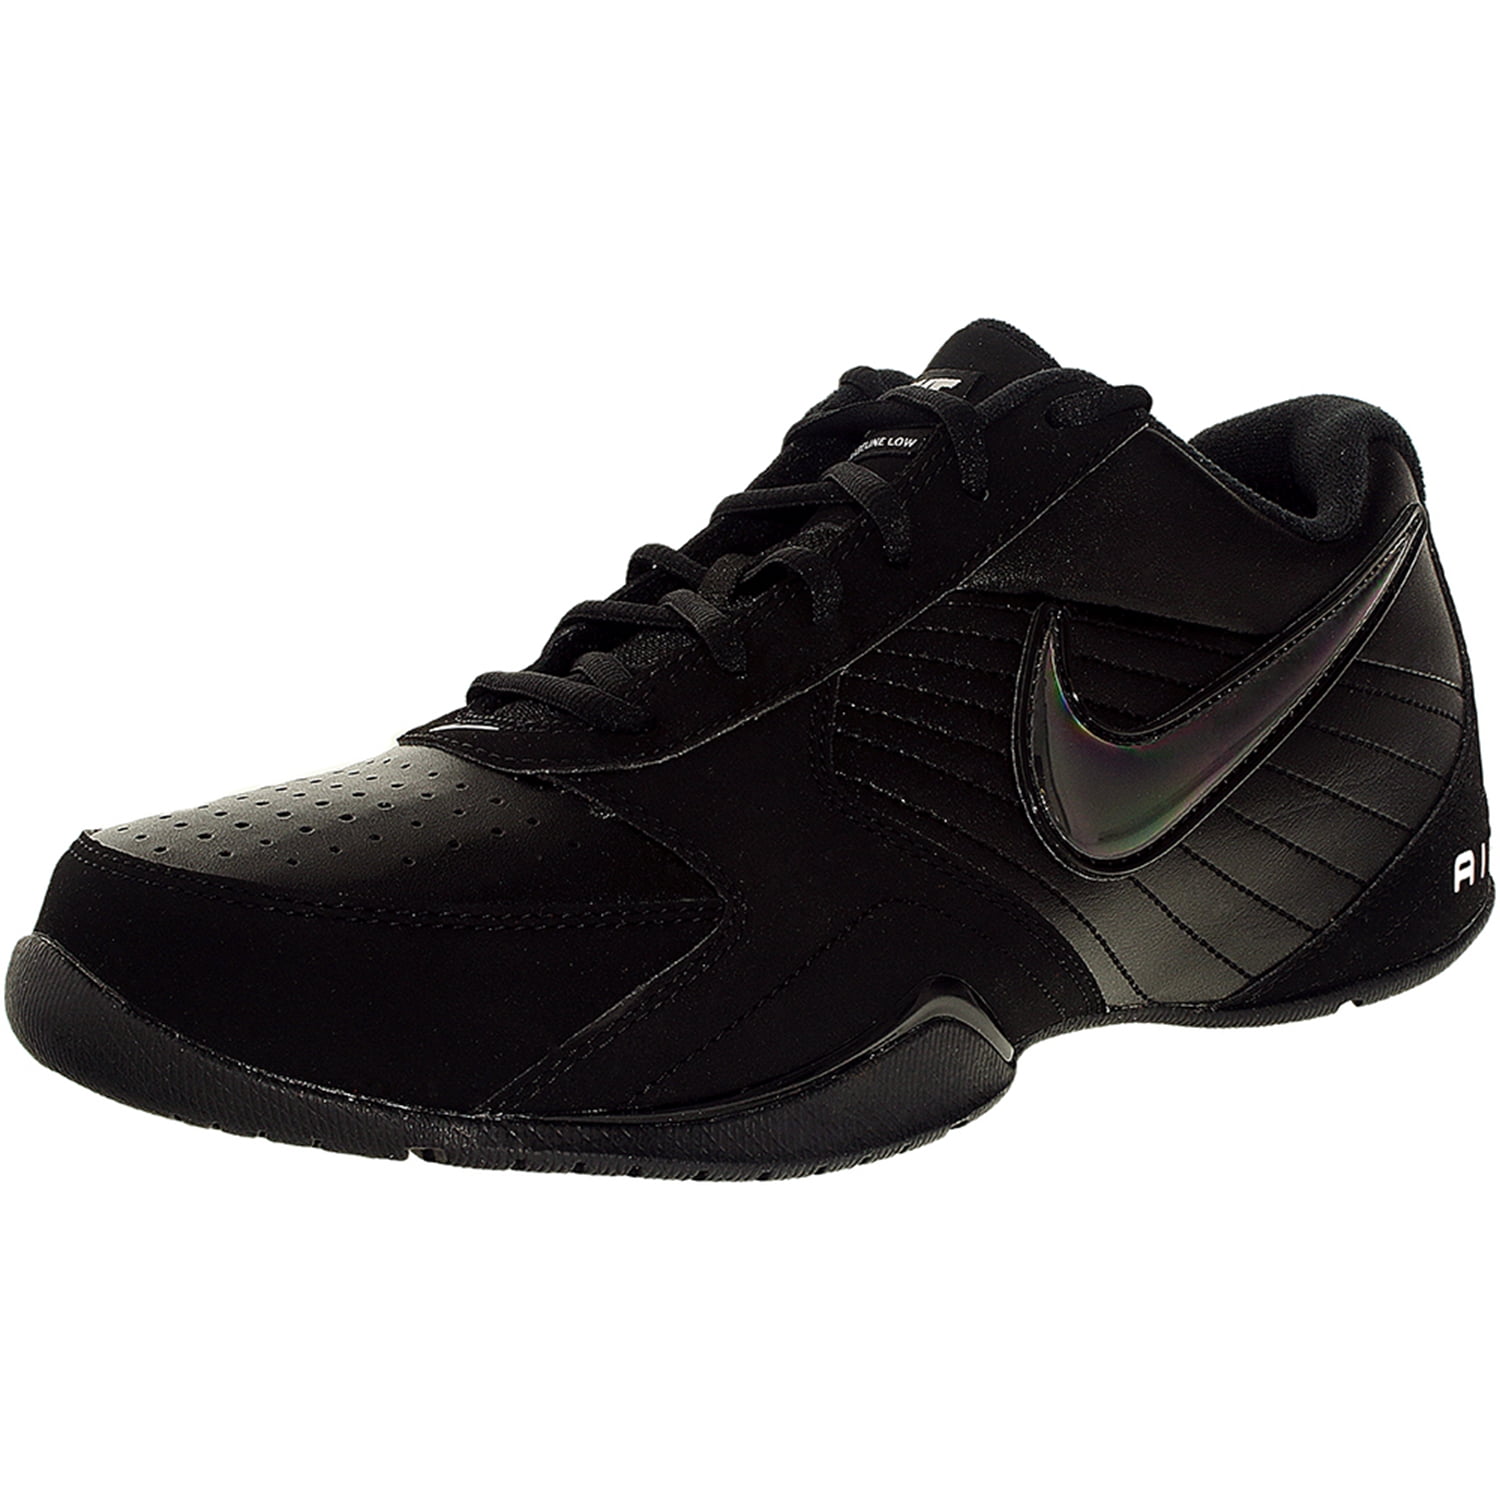 Nike - Nike Men's Air Baseline Low Black/Black/White Top ...